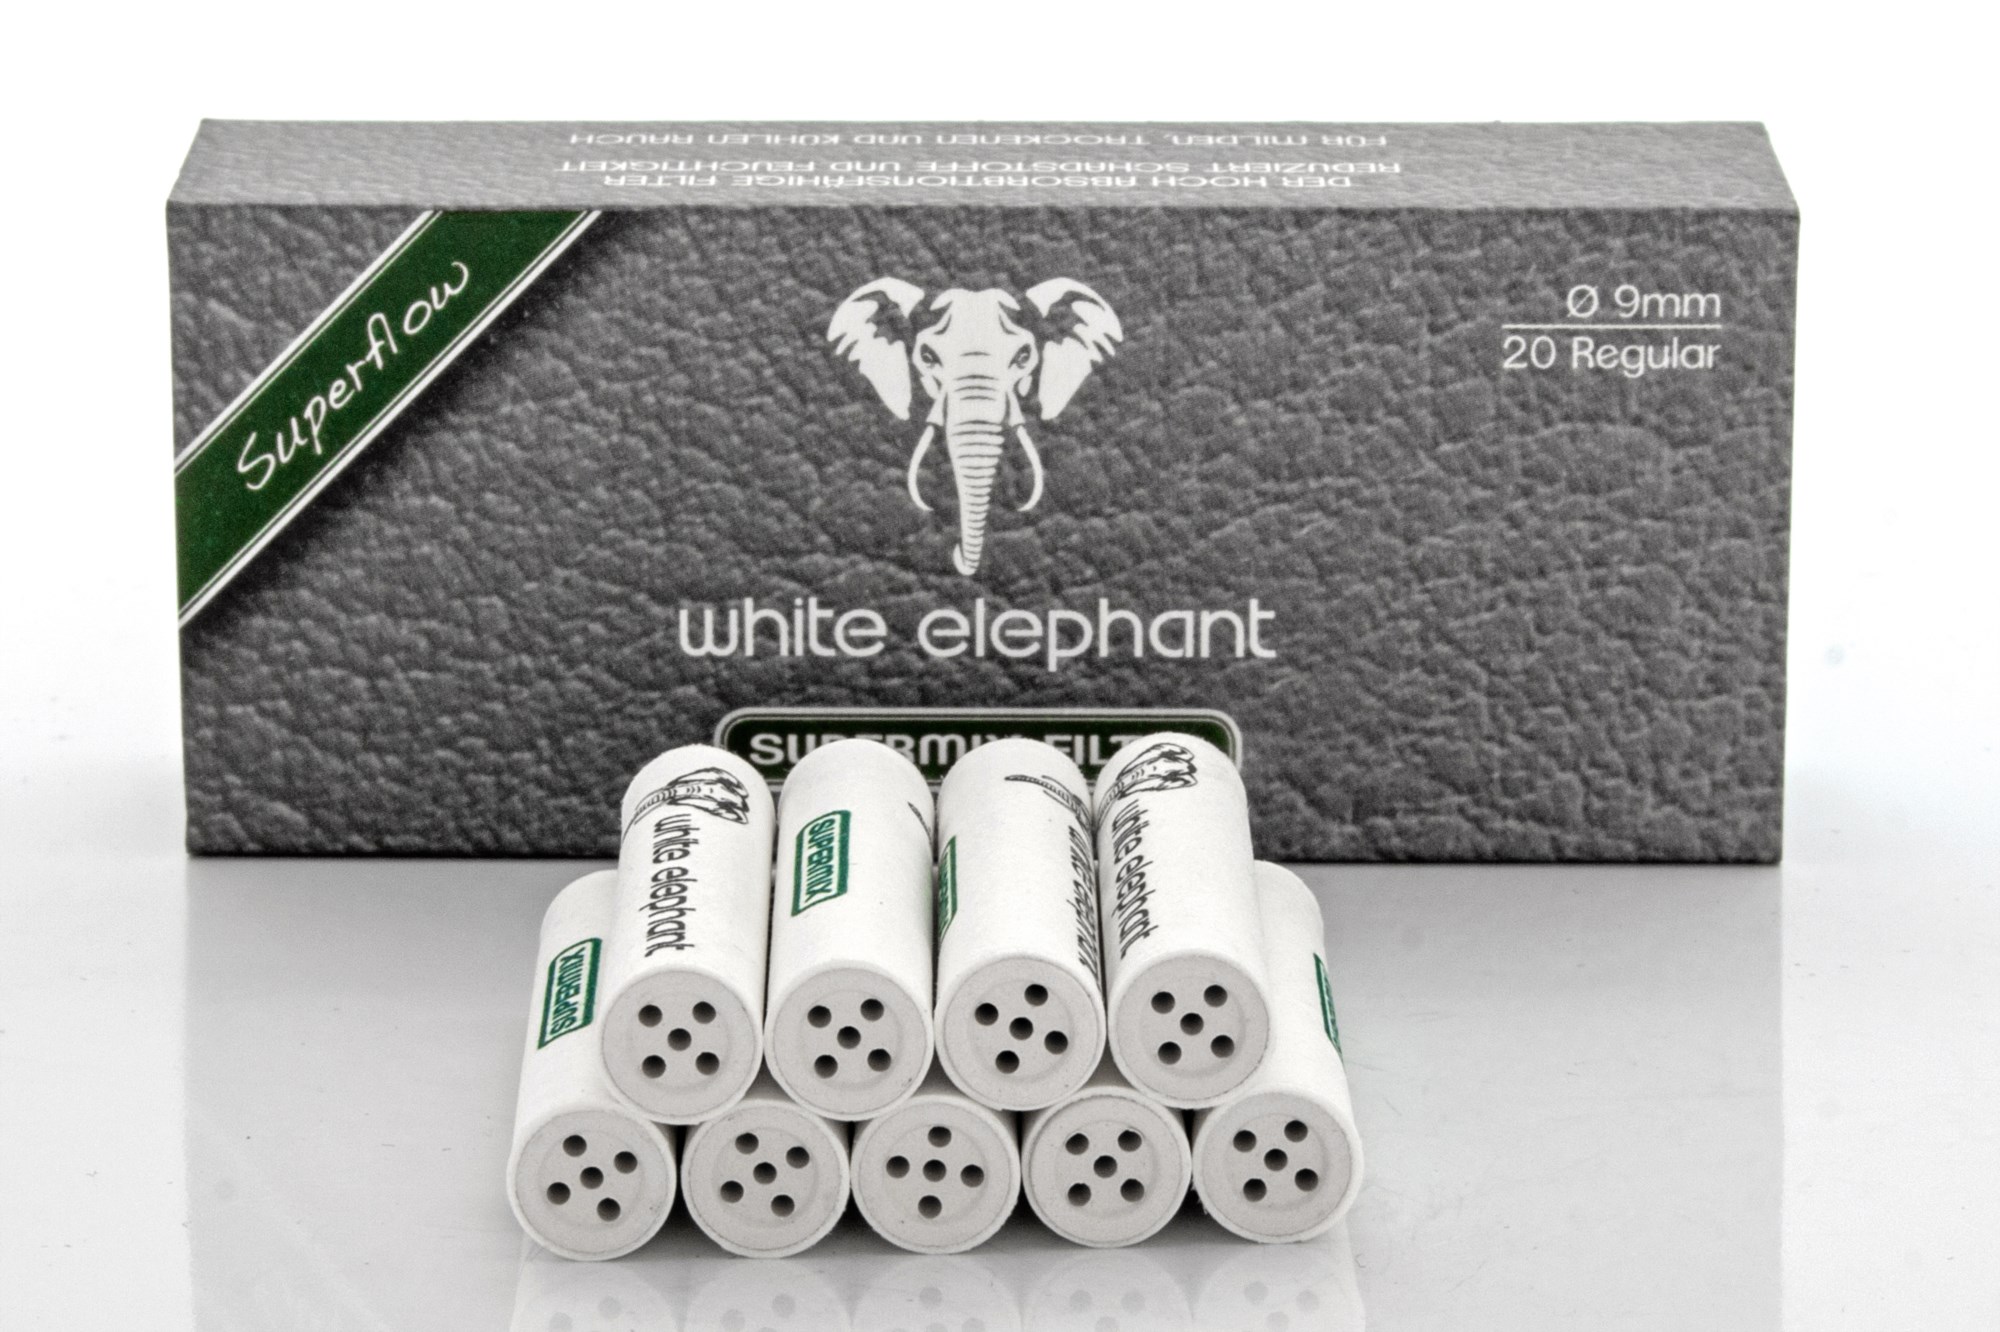 White Elephant 20 Super Mix Filter 9mm (20x)